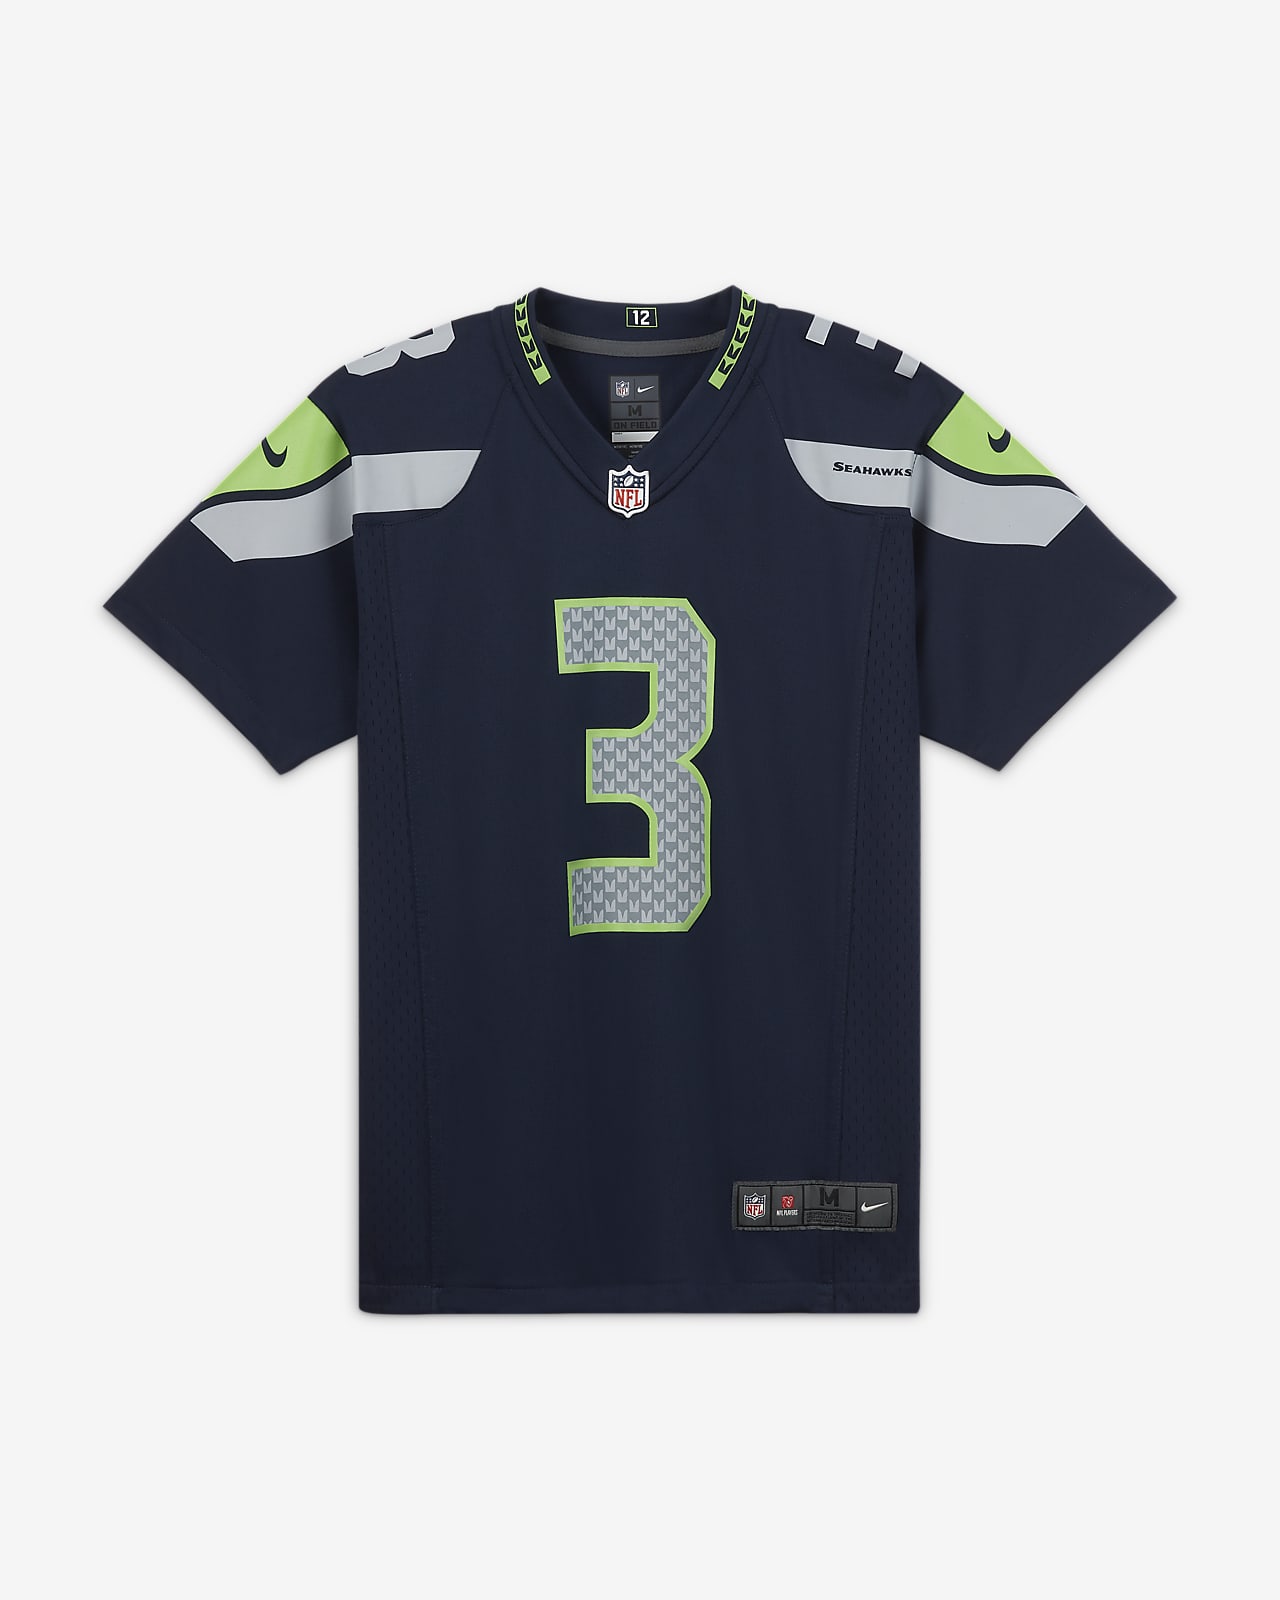 NFL Seattle Seahawks (Russell Wilson) Samarreta de futbol americà - Nen/a